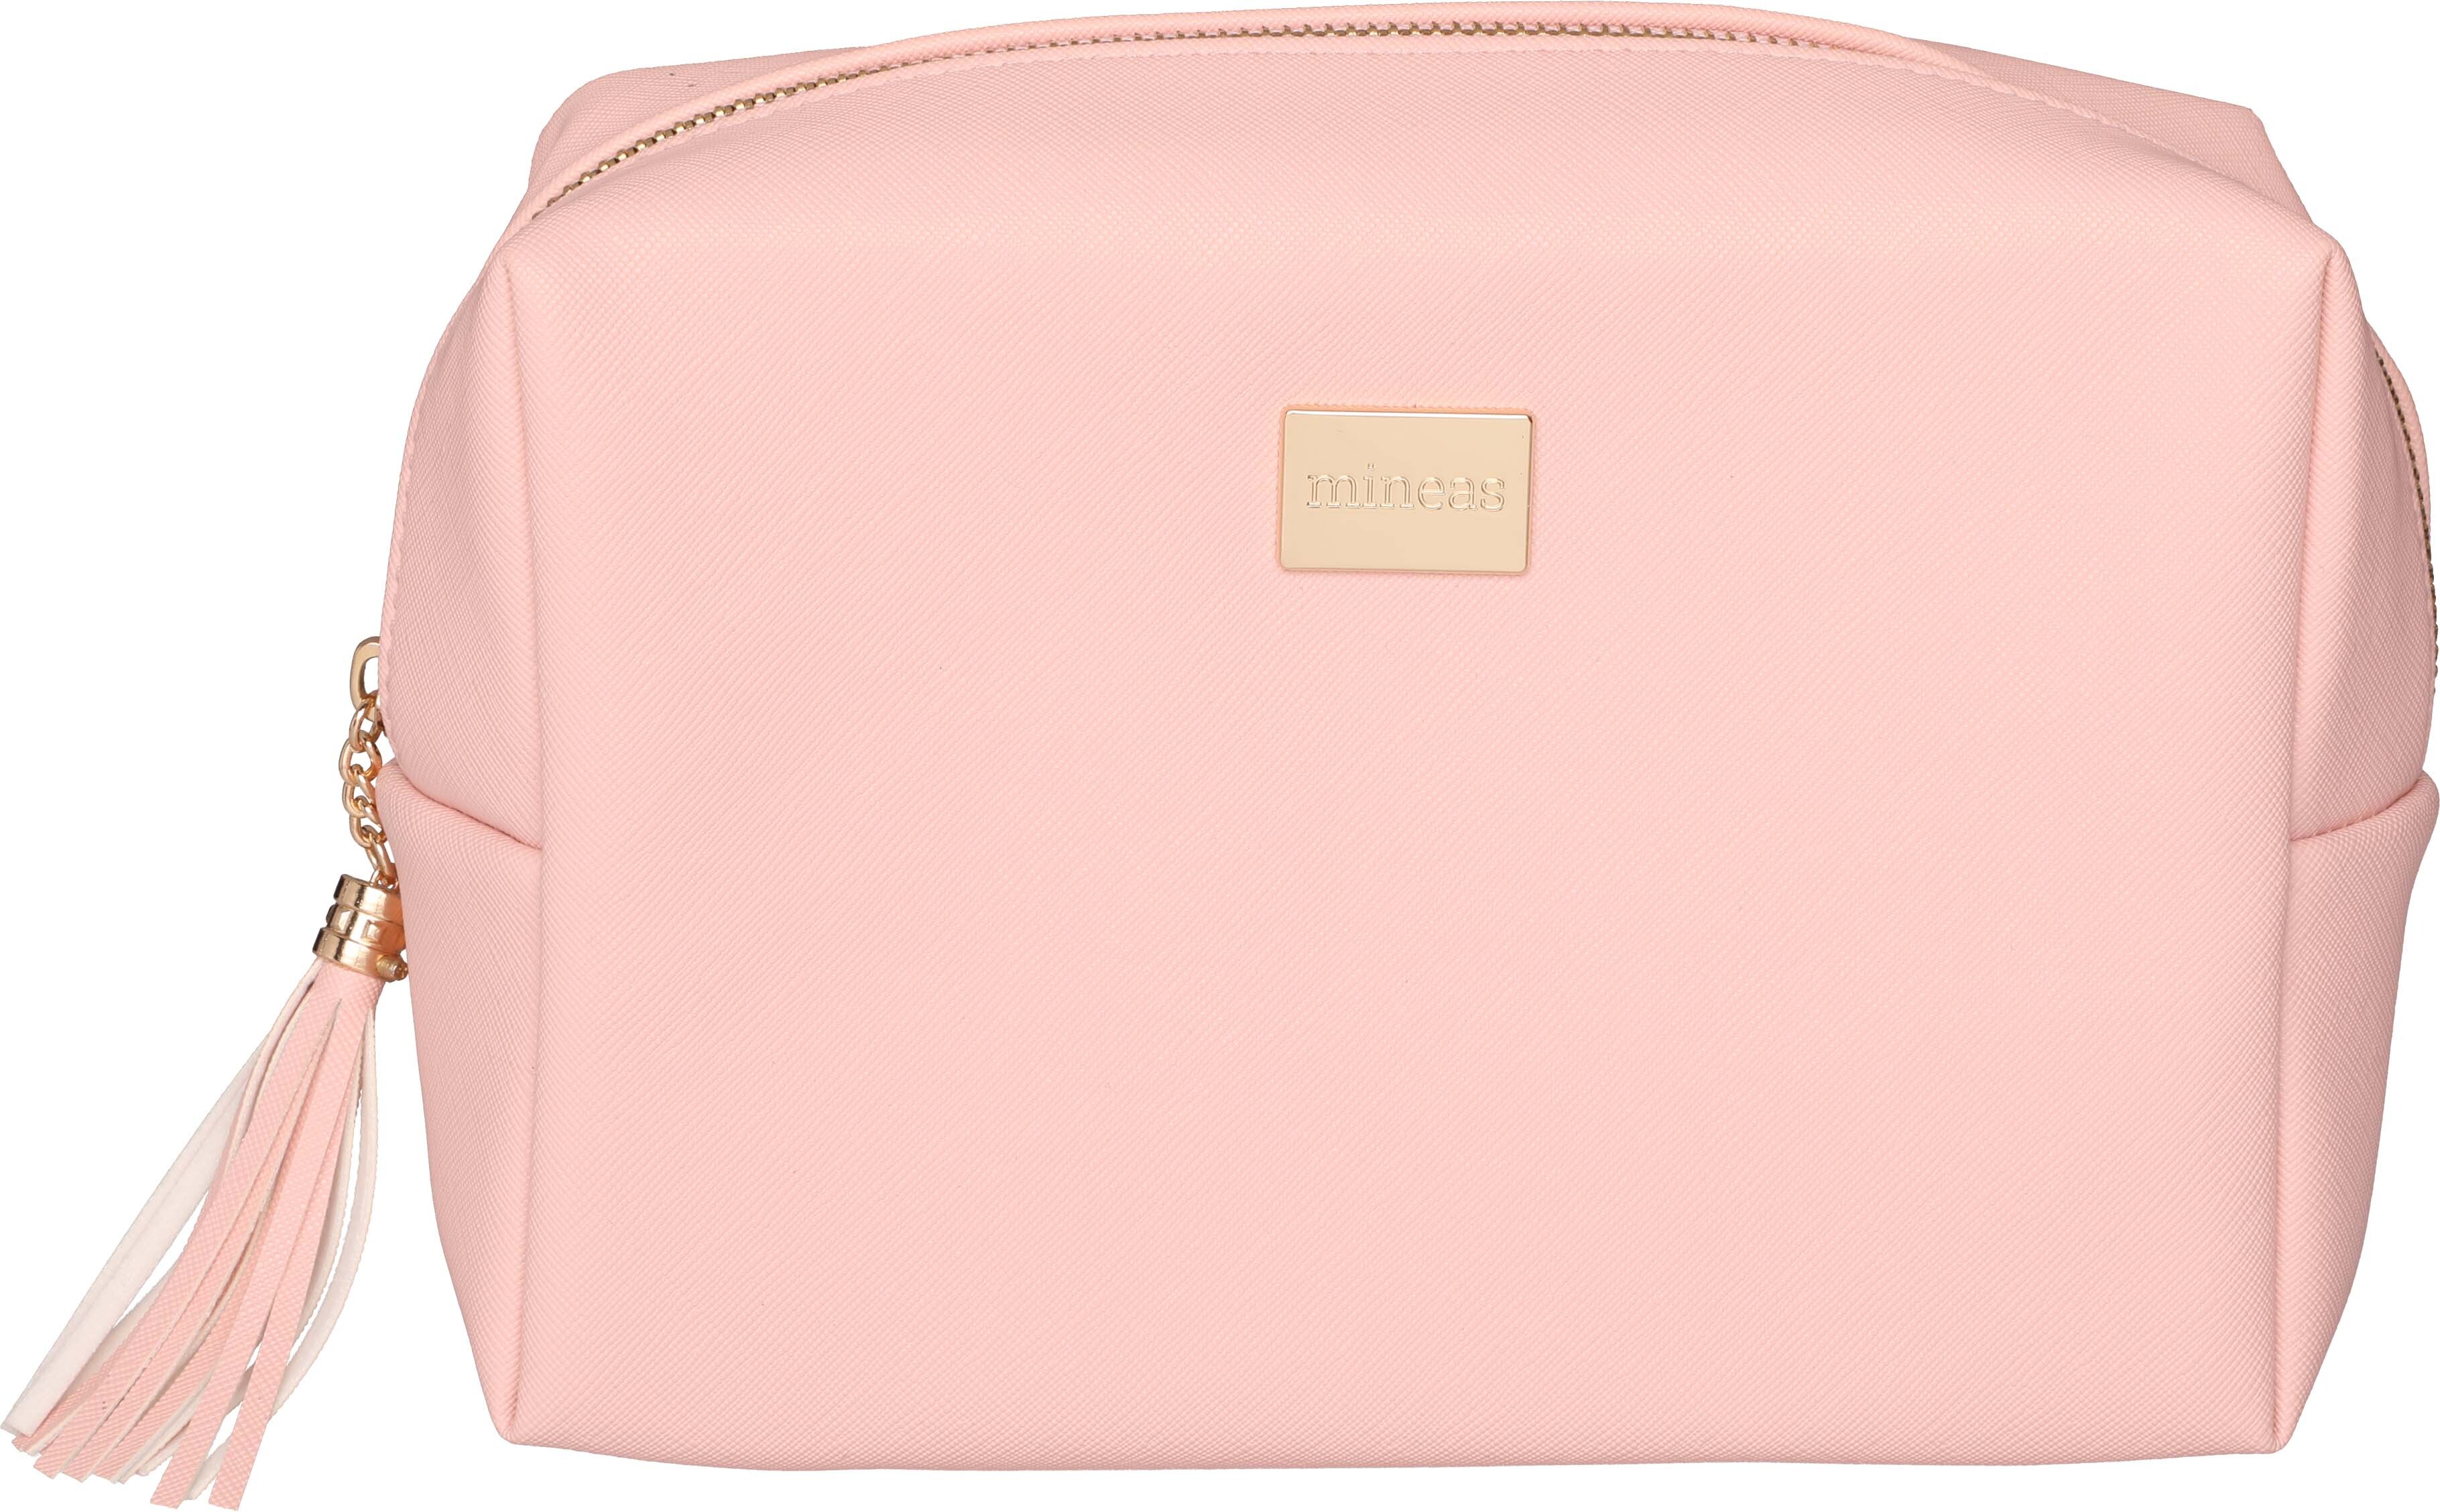 Mineas Cosmetic Bag Pink